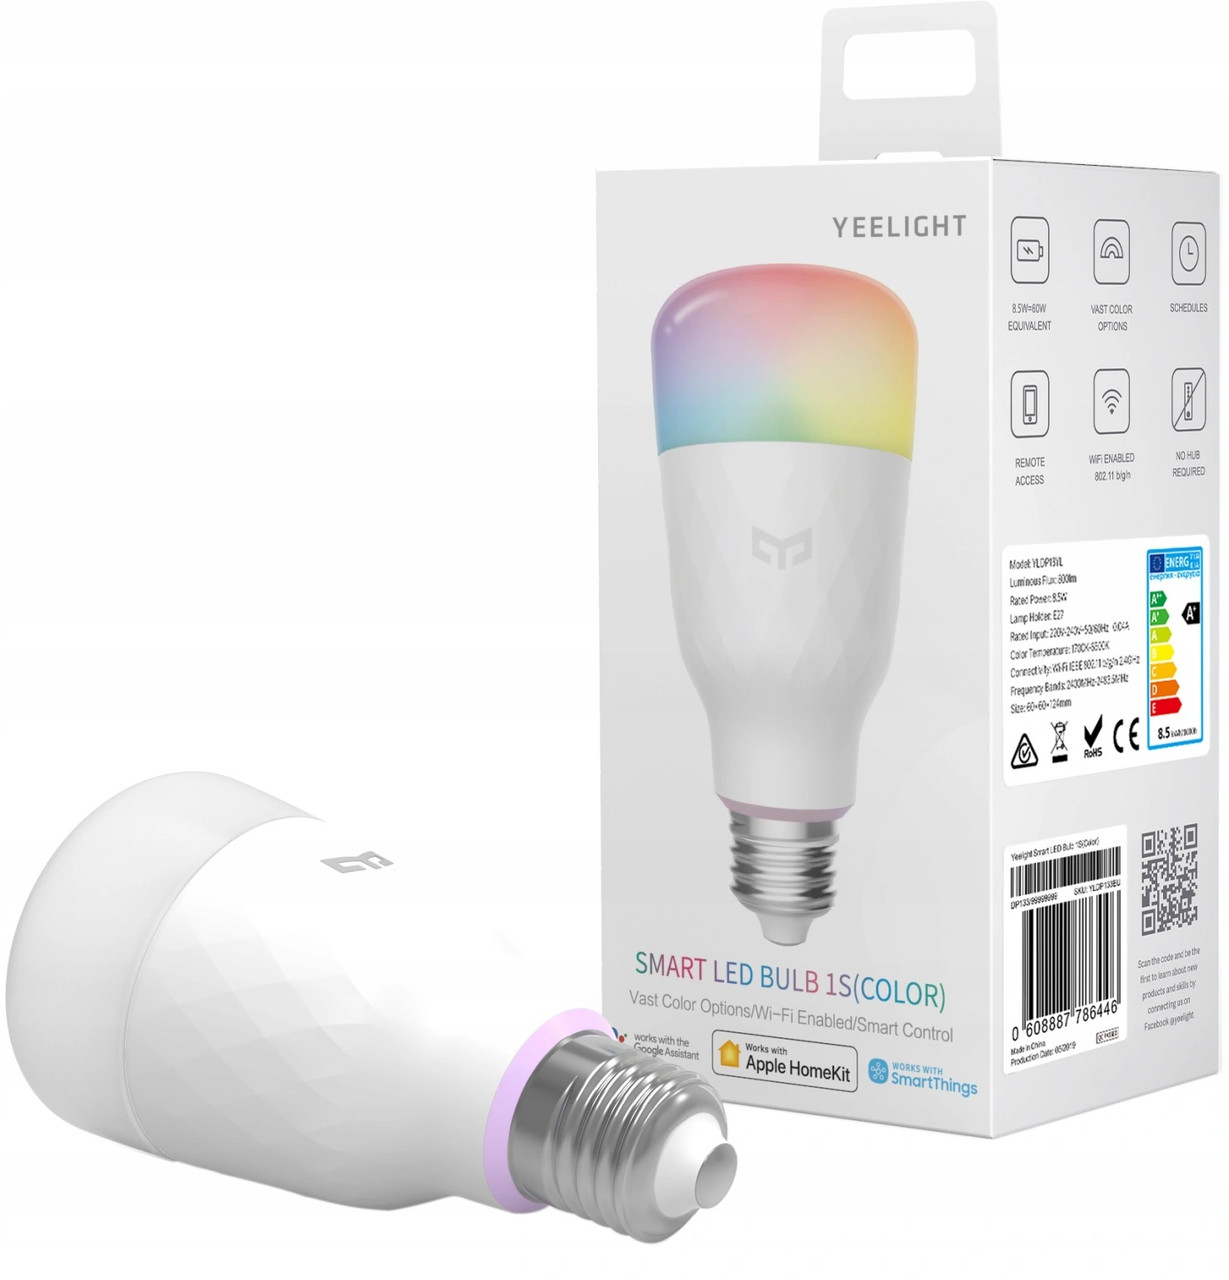 Original Xiaomi Yeelight Smart LED Bulb (Color) E27 10W 800